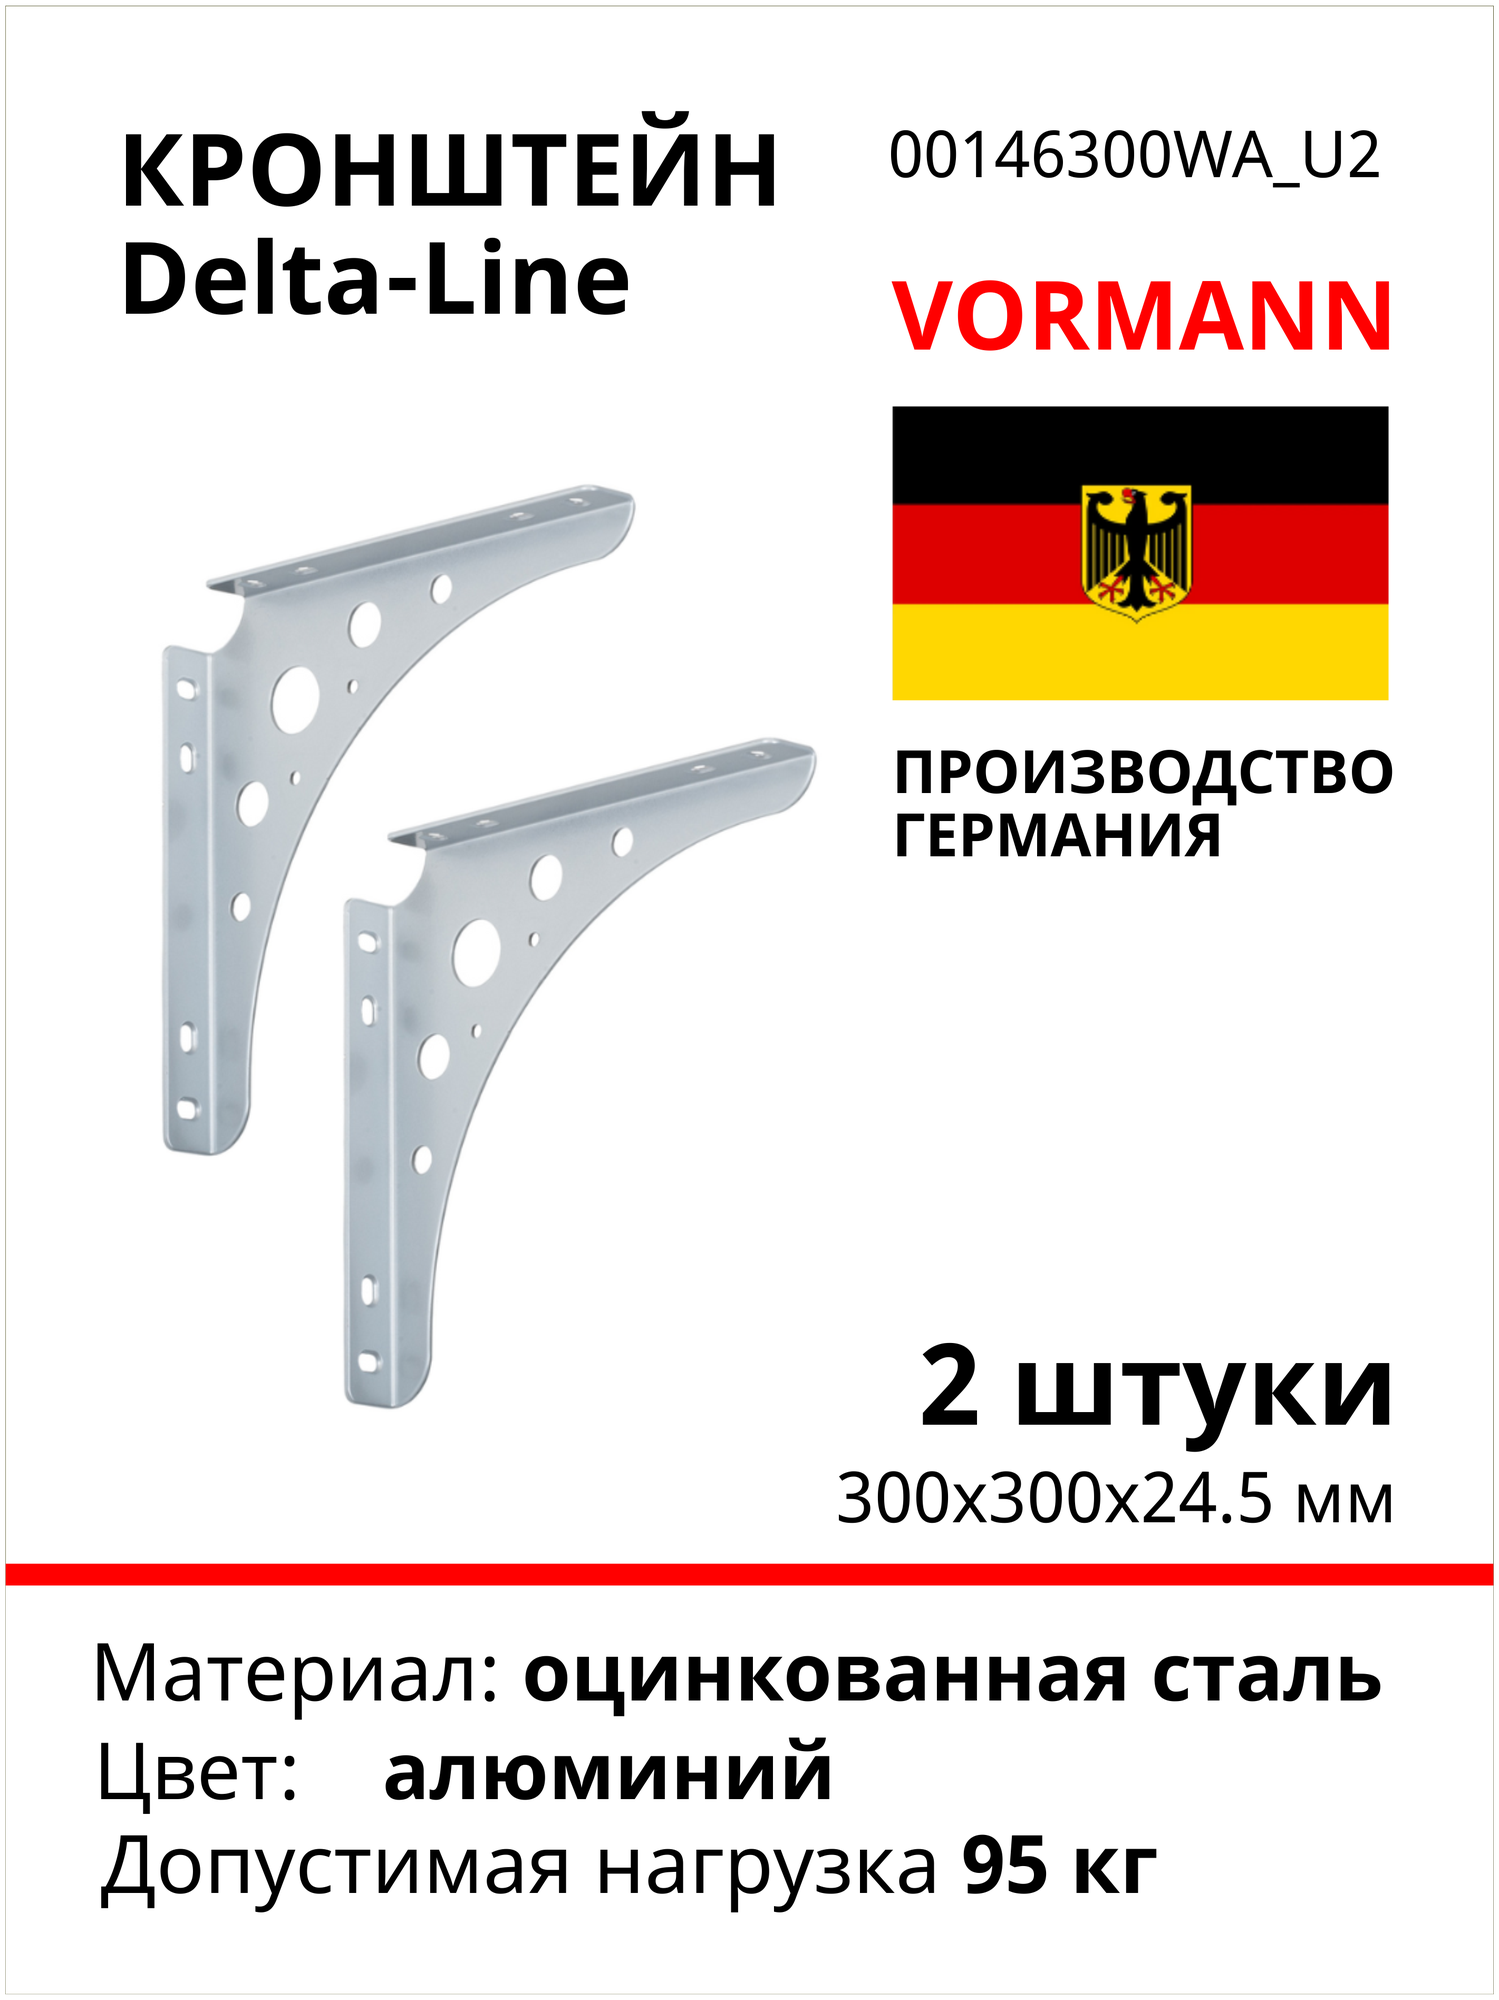 Кронштейн VORMANN Delta-Line 300х300х24,5 мм, оцинкованный, цвет: белый алюминий, 95 кг 00146 300 WA_U2, 2 шт